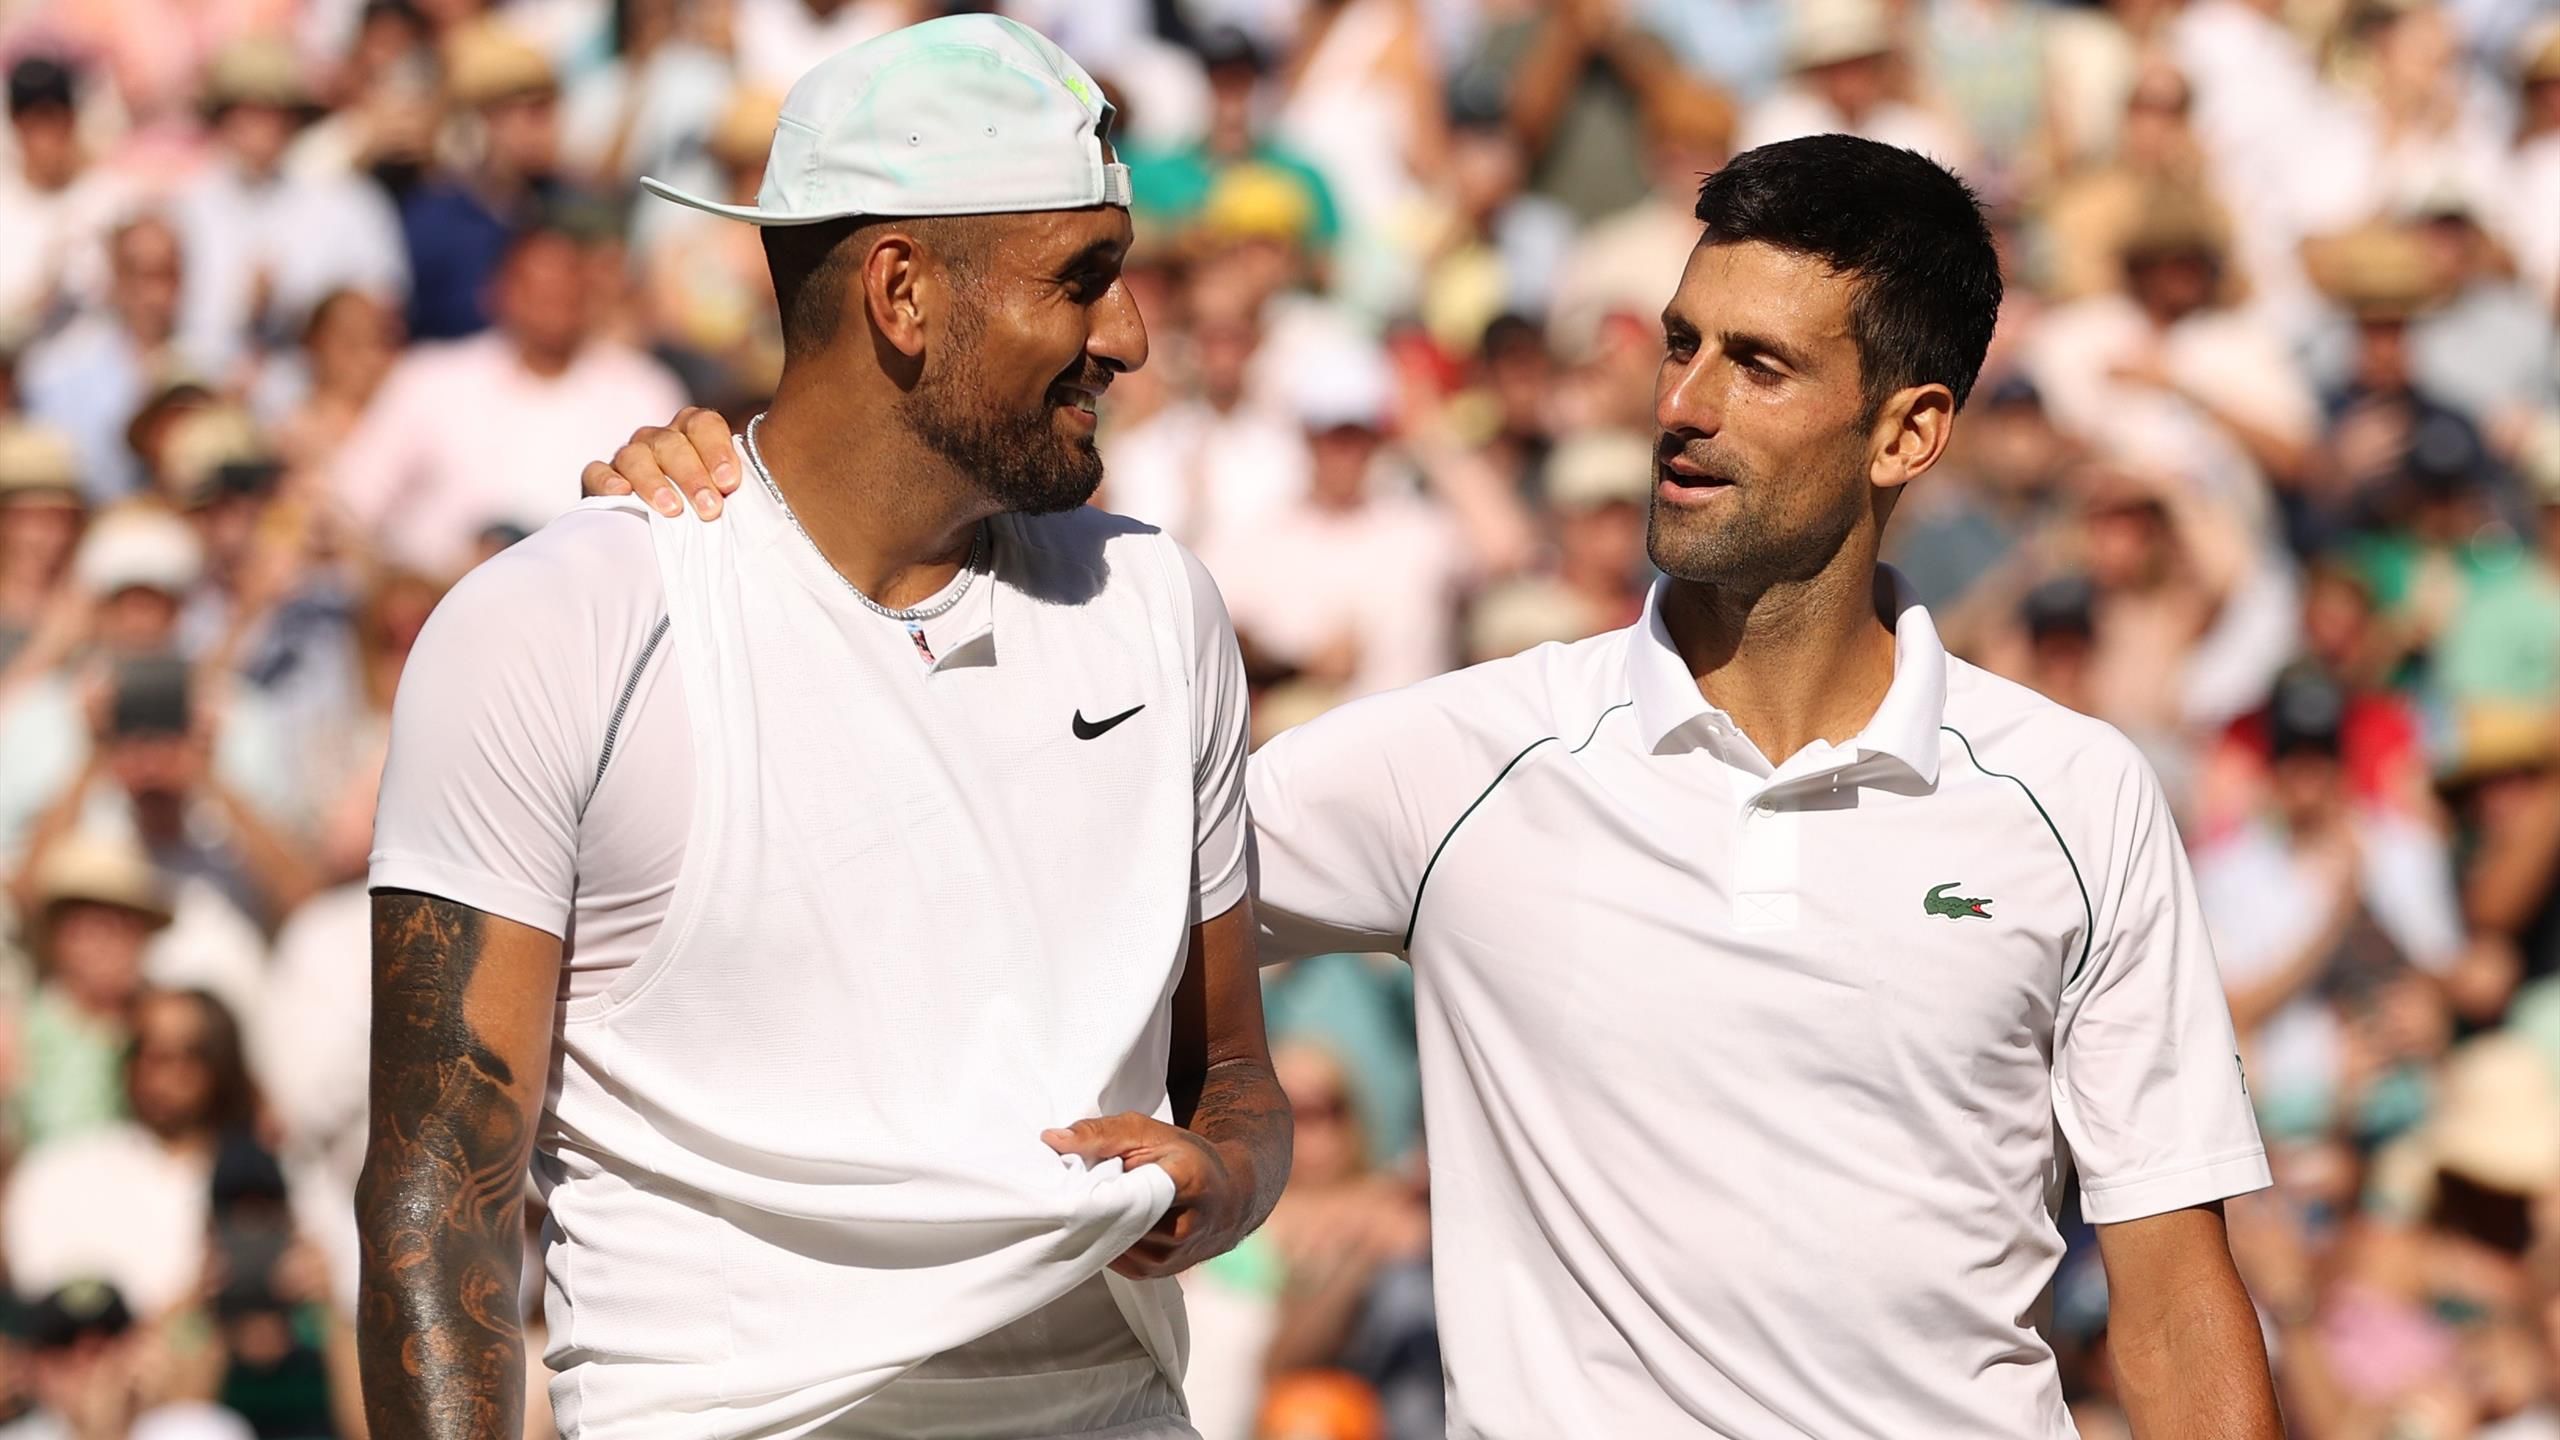 Wimbledon final Its officially a bromance - Novak Djokovic pays tribute to phenomenal Nick Kyrgios